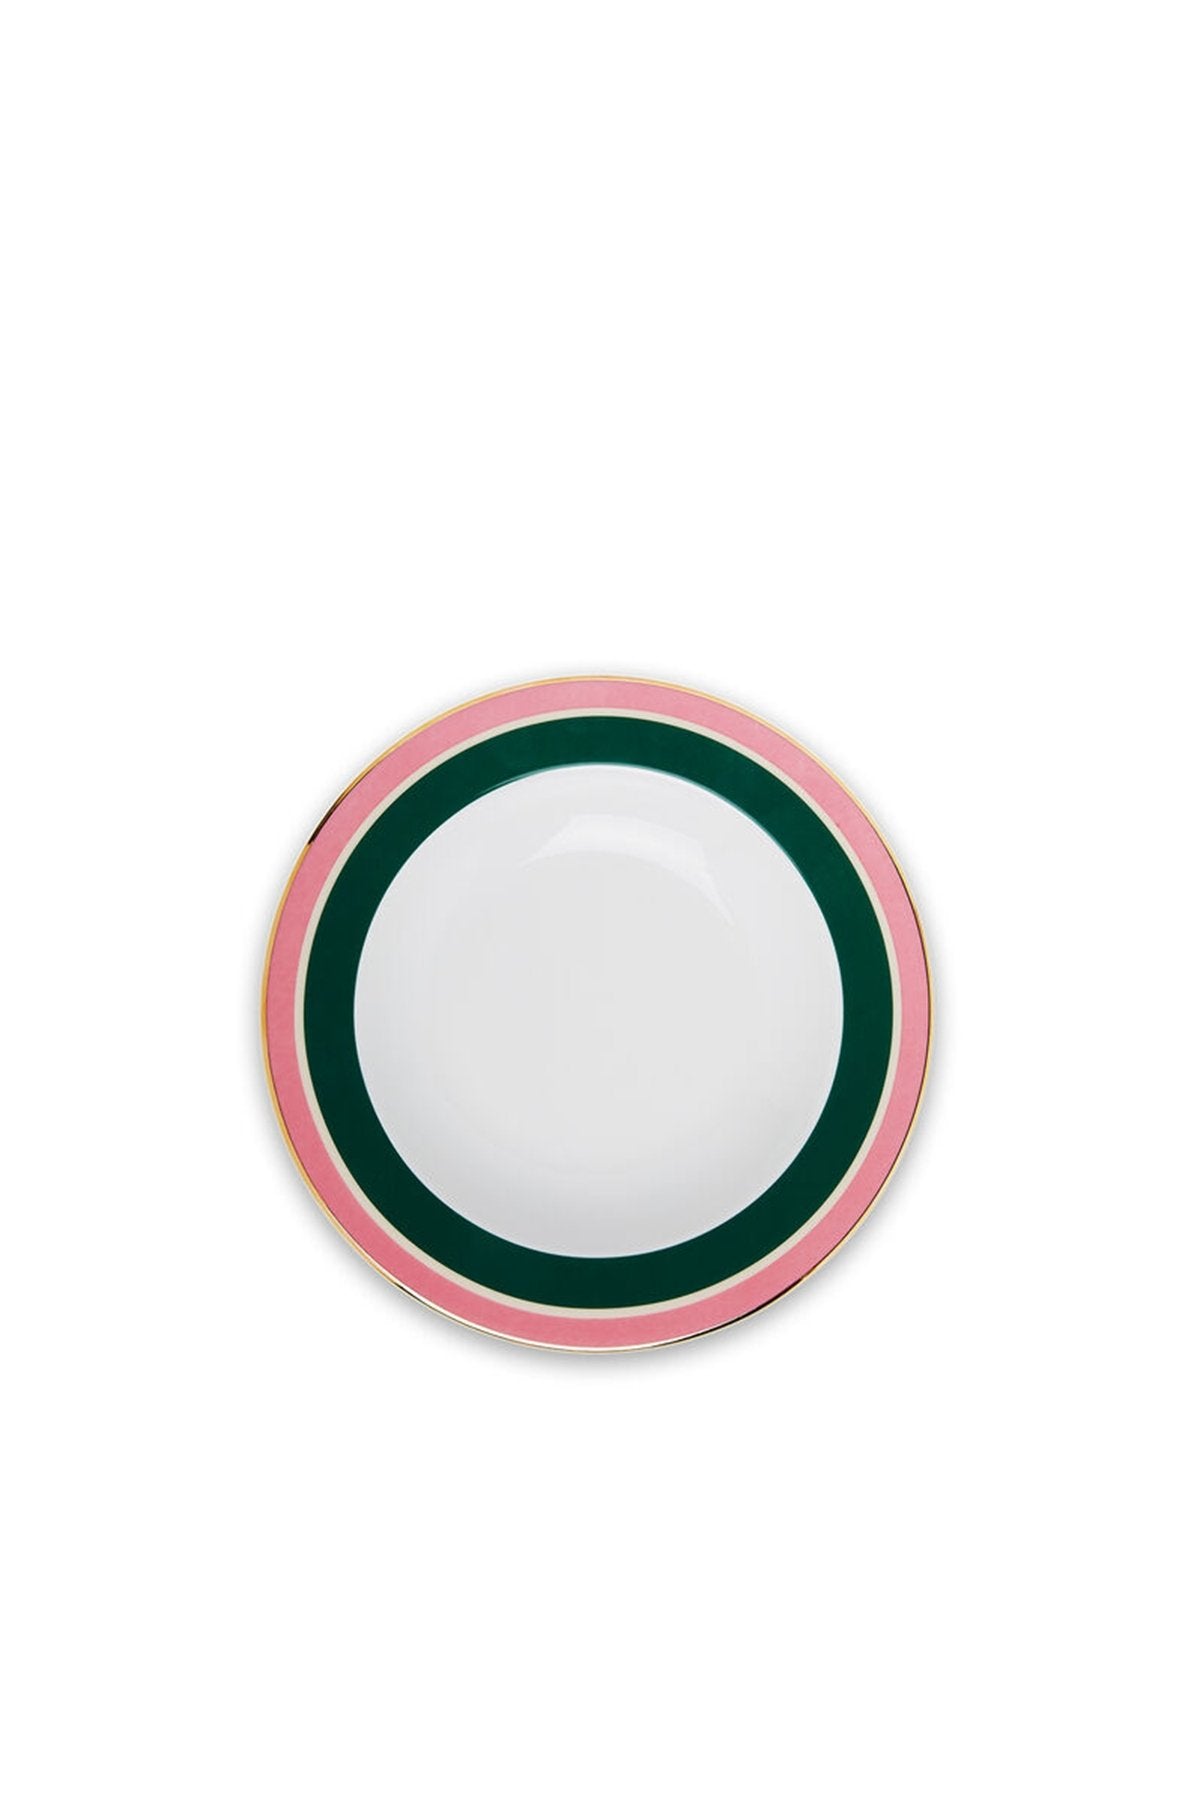 Soup Plate in Rainbow Verde - shop-olivia.com